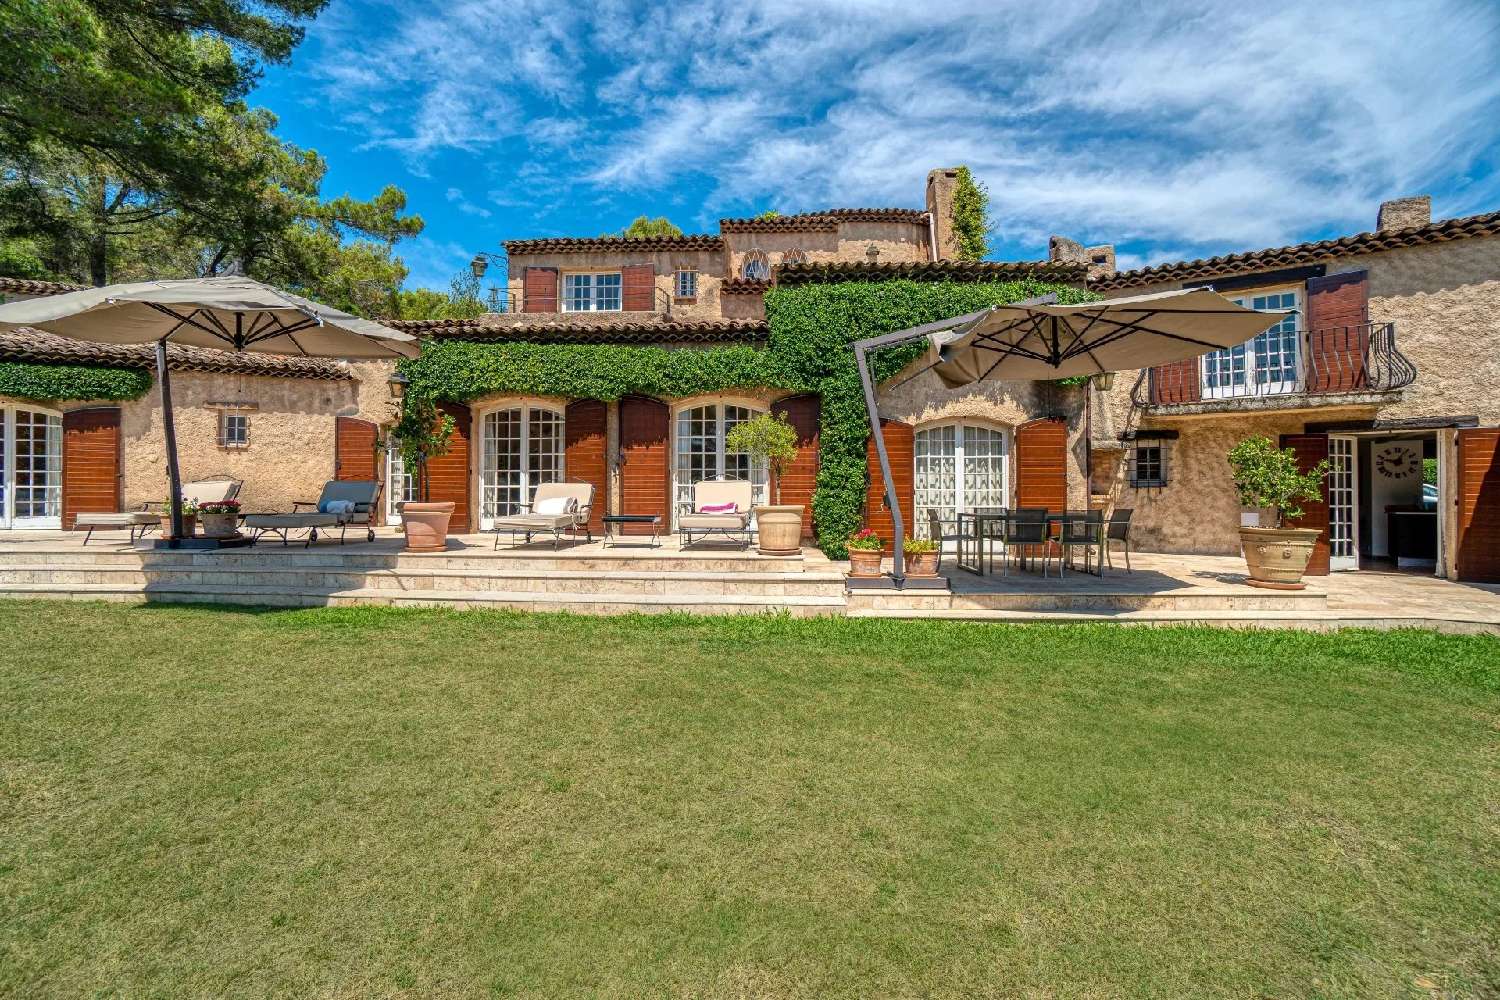  à vendre villa Grasse Alpes-Maritimes 2